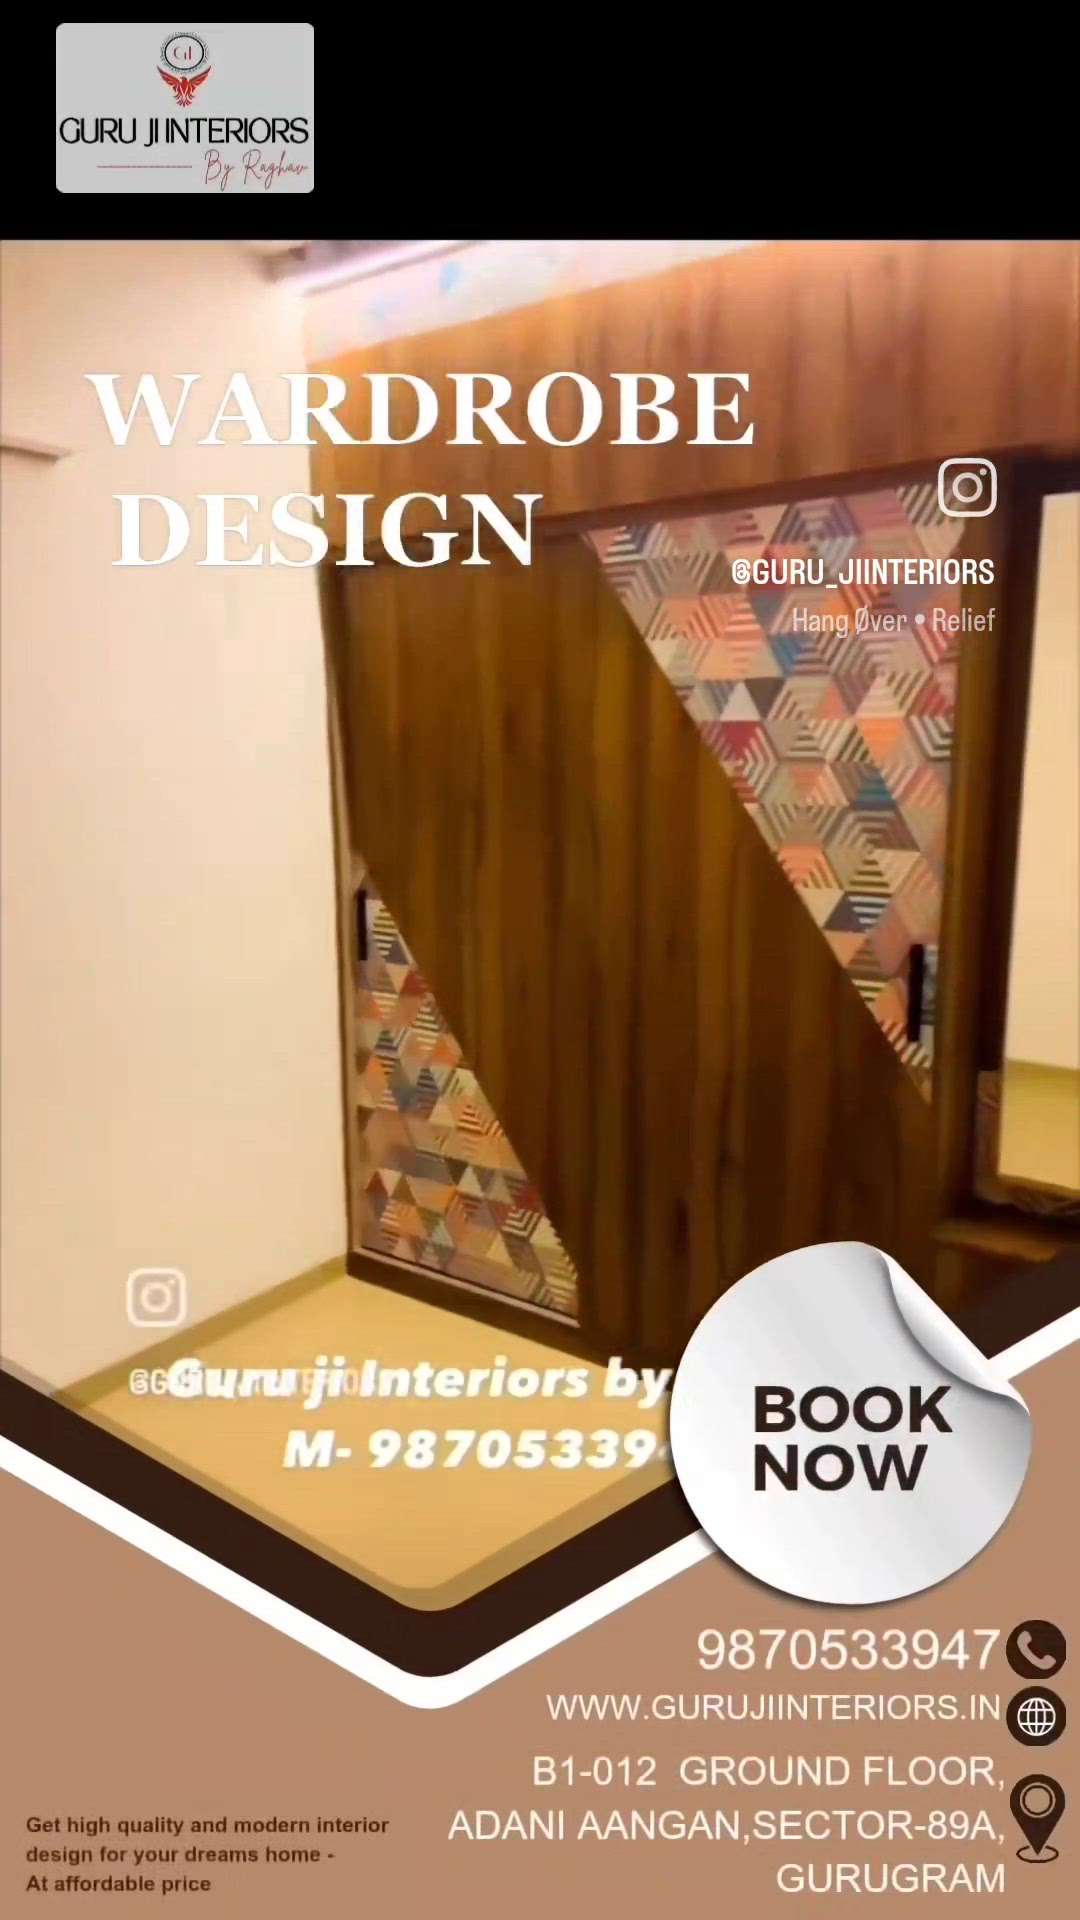 See new style of wardrobe design ✨
@ Like this design? Follow for more.
Guru ji interiors 
By - Raghav 
Call - 9870533947 
#gurujiinteriors 
.
#interiordesign#wardrobedesign #interior#cupboard #wardrobe#almirah#modularkitchen
#home.